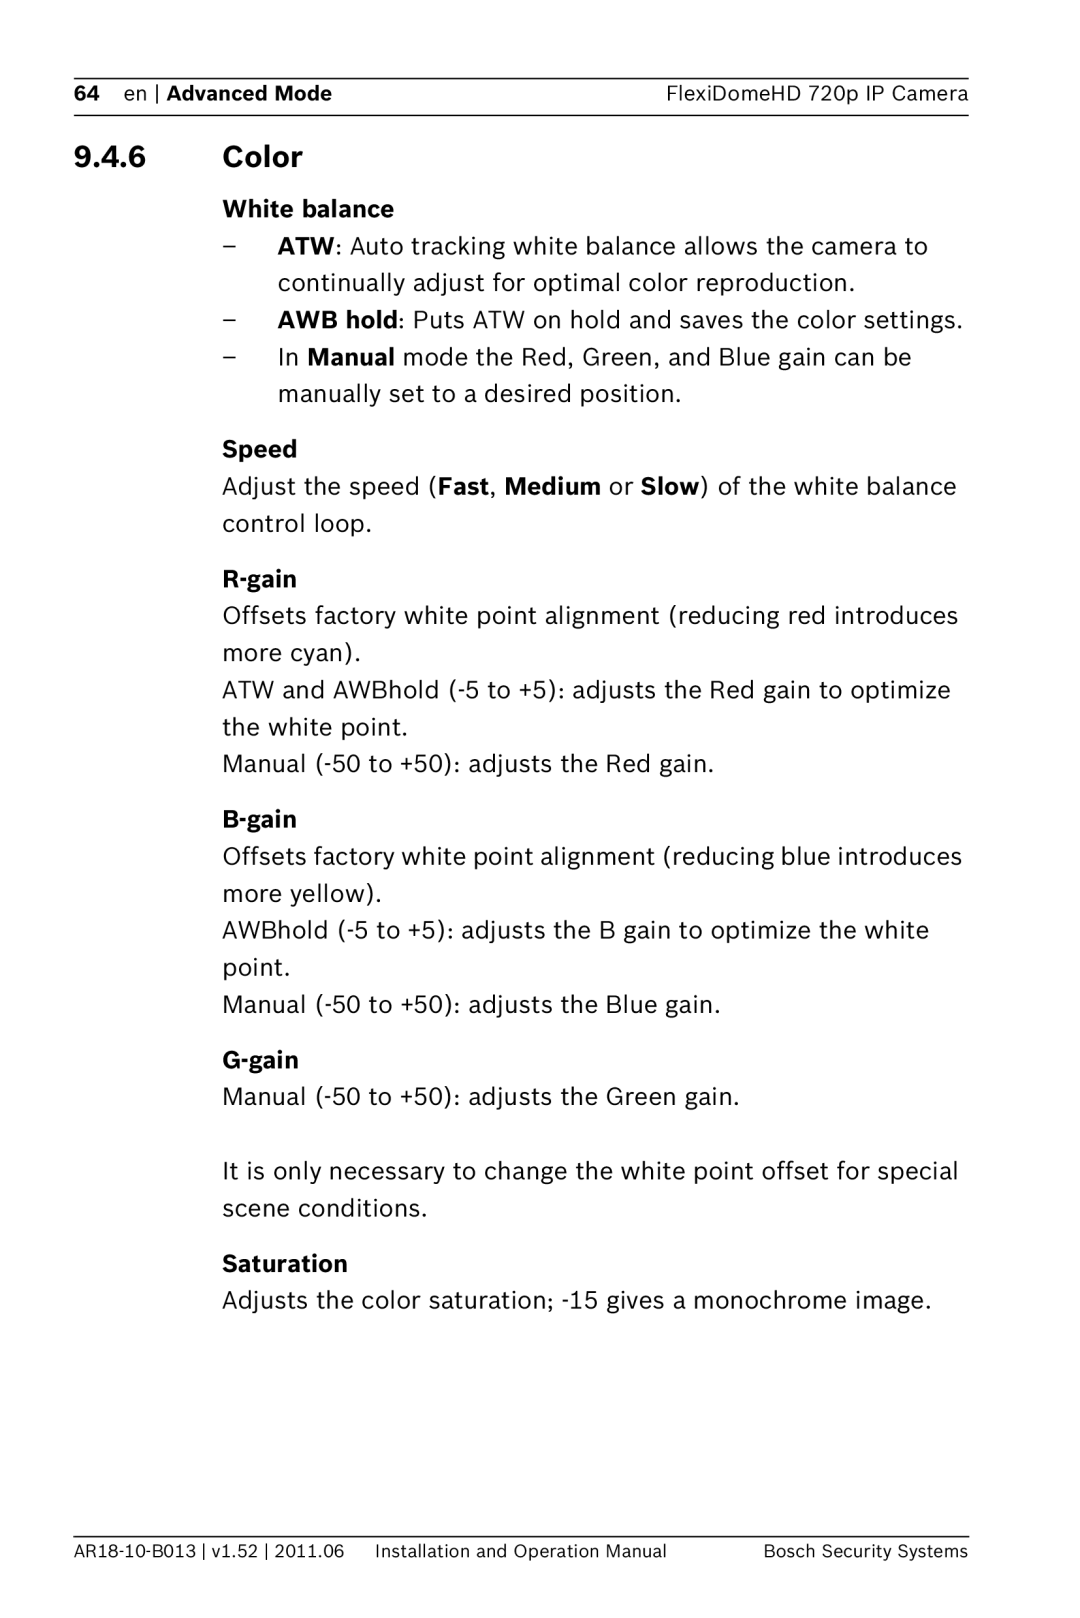 Bosch Appliances NDN-921 operation manual 9.4.6Color, White balance, R-gain, B-gain, G-gain, Saturation, Speed 